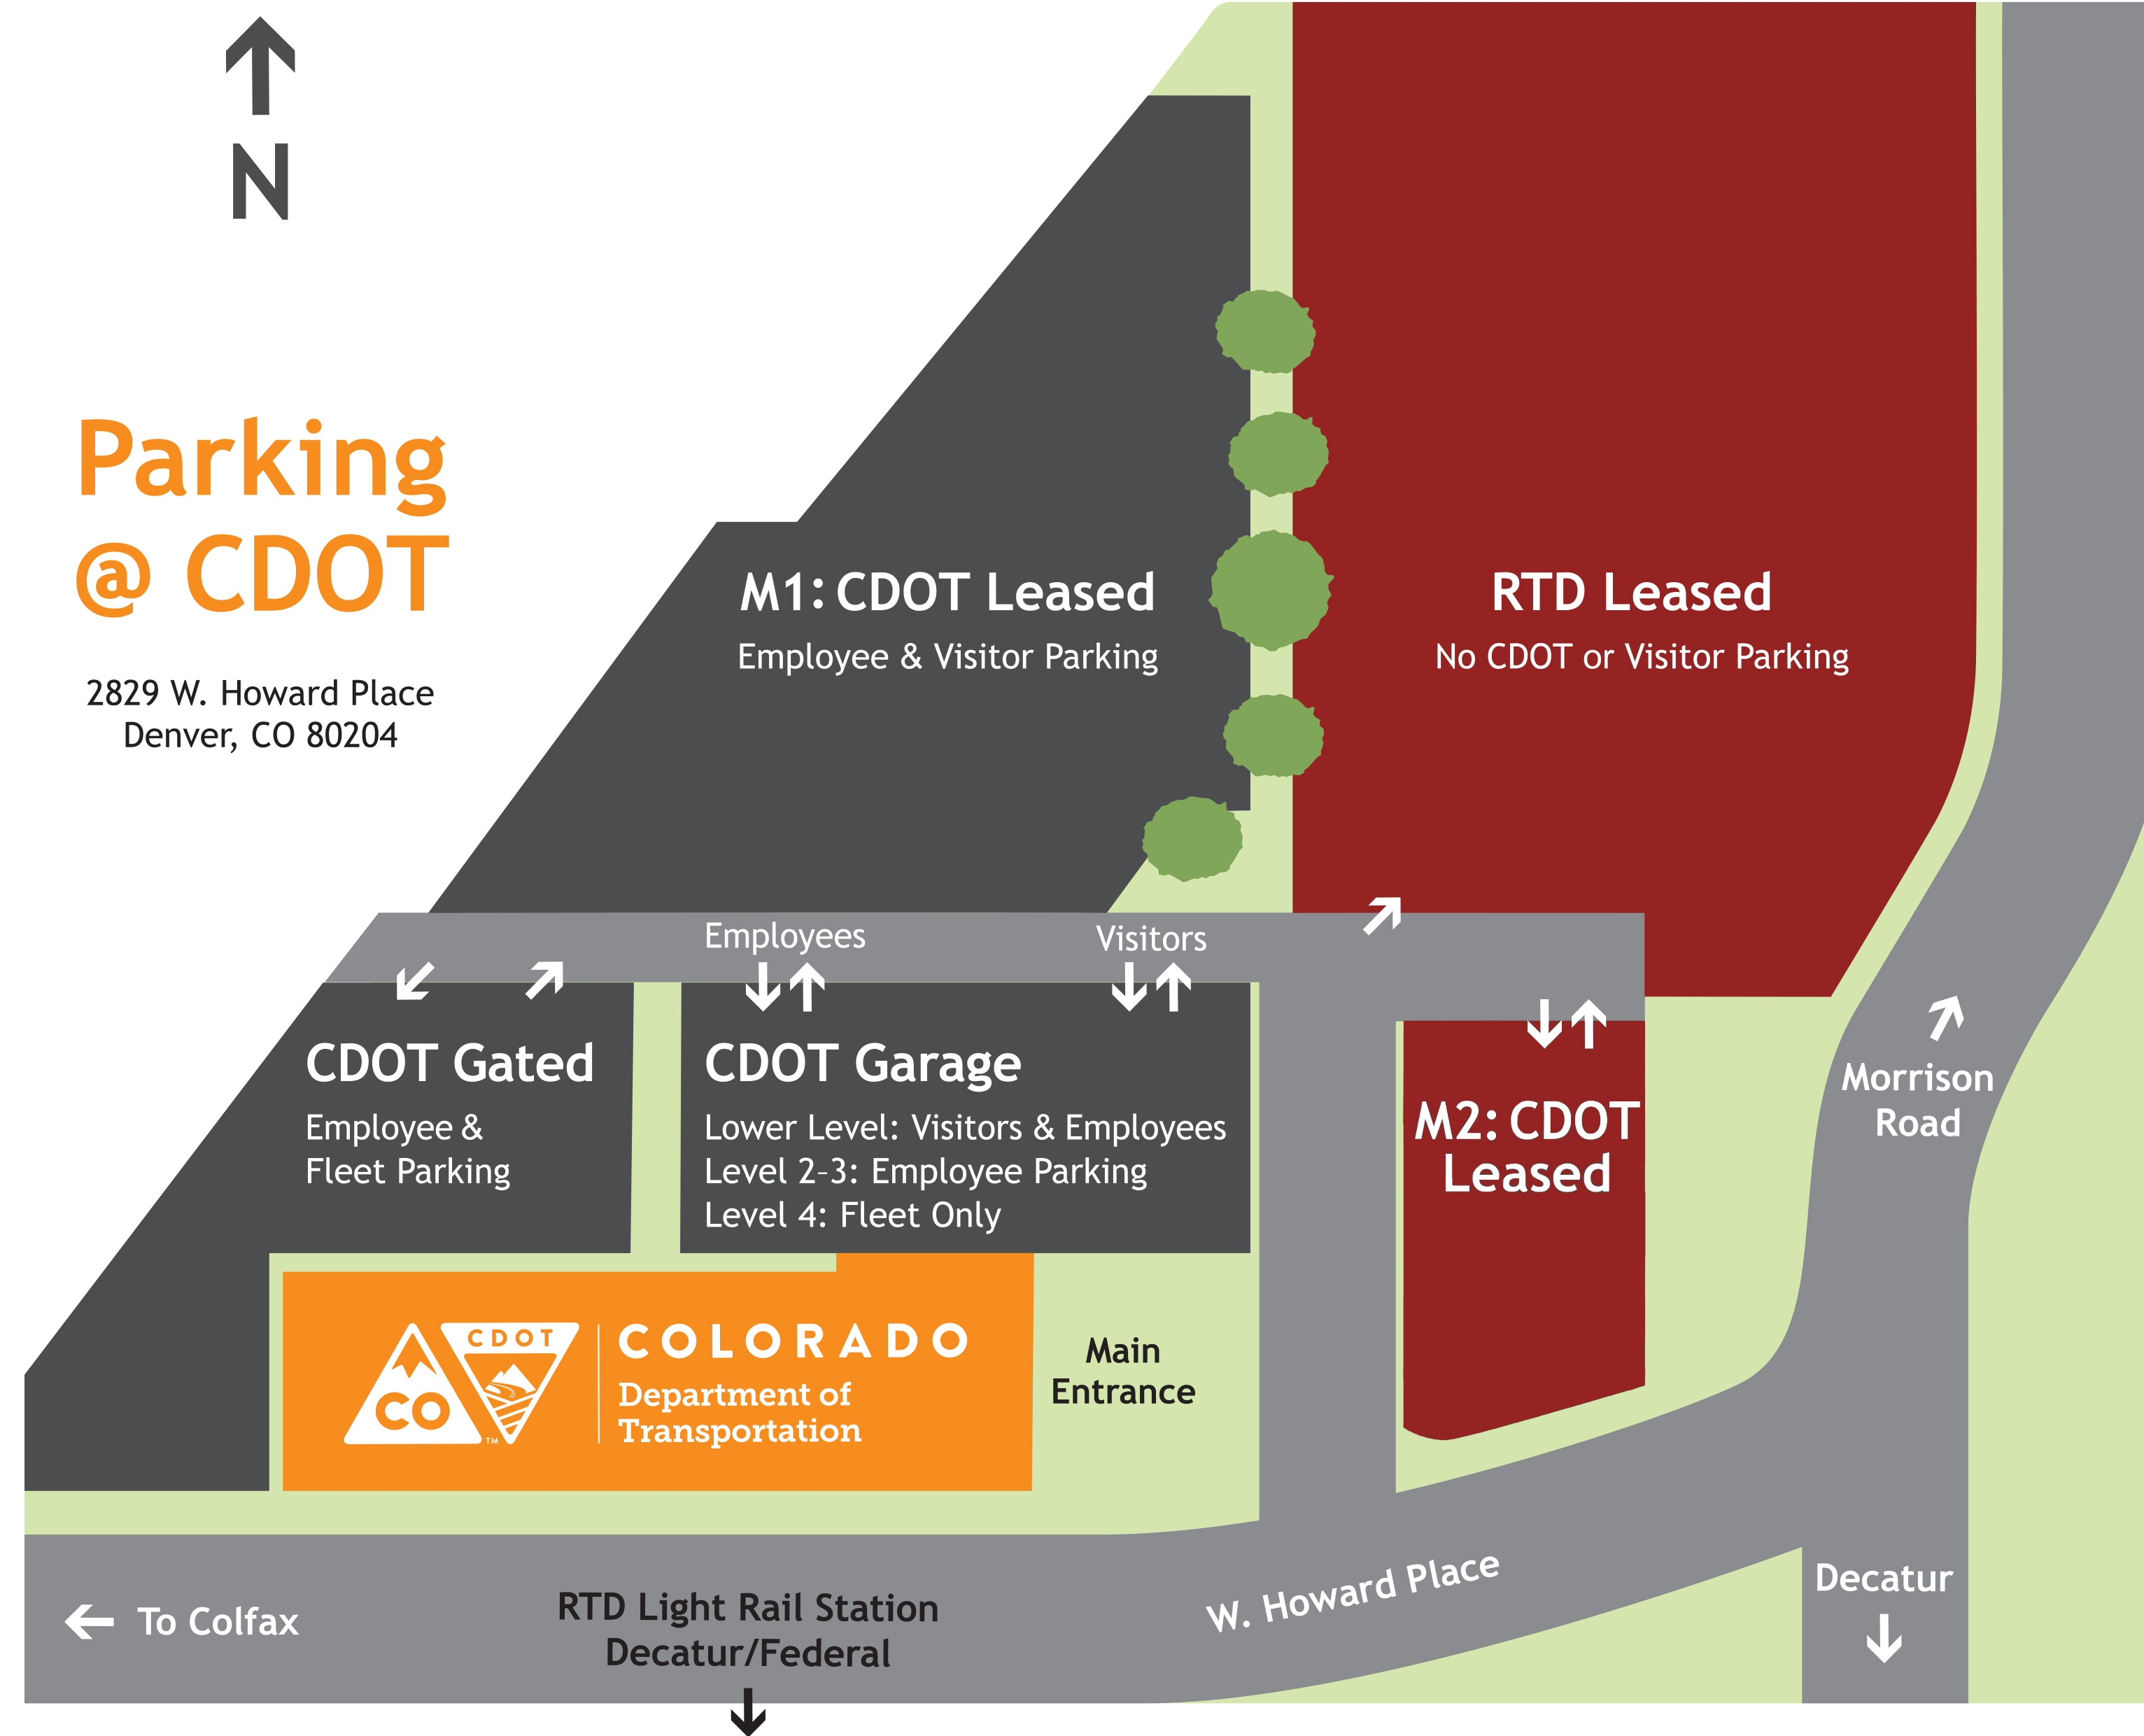 CDOT HQ_Parking_Diagram 4.8.19.jpg detail image